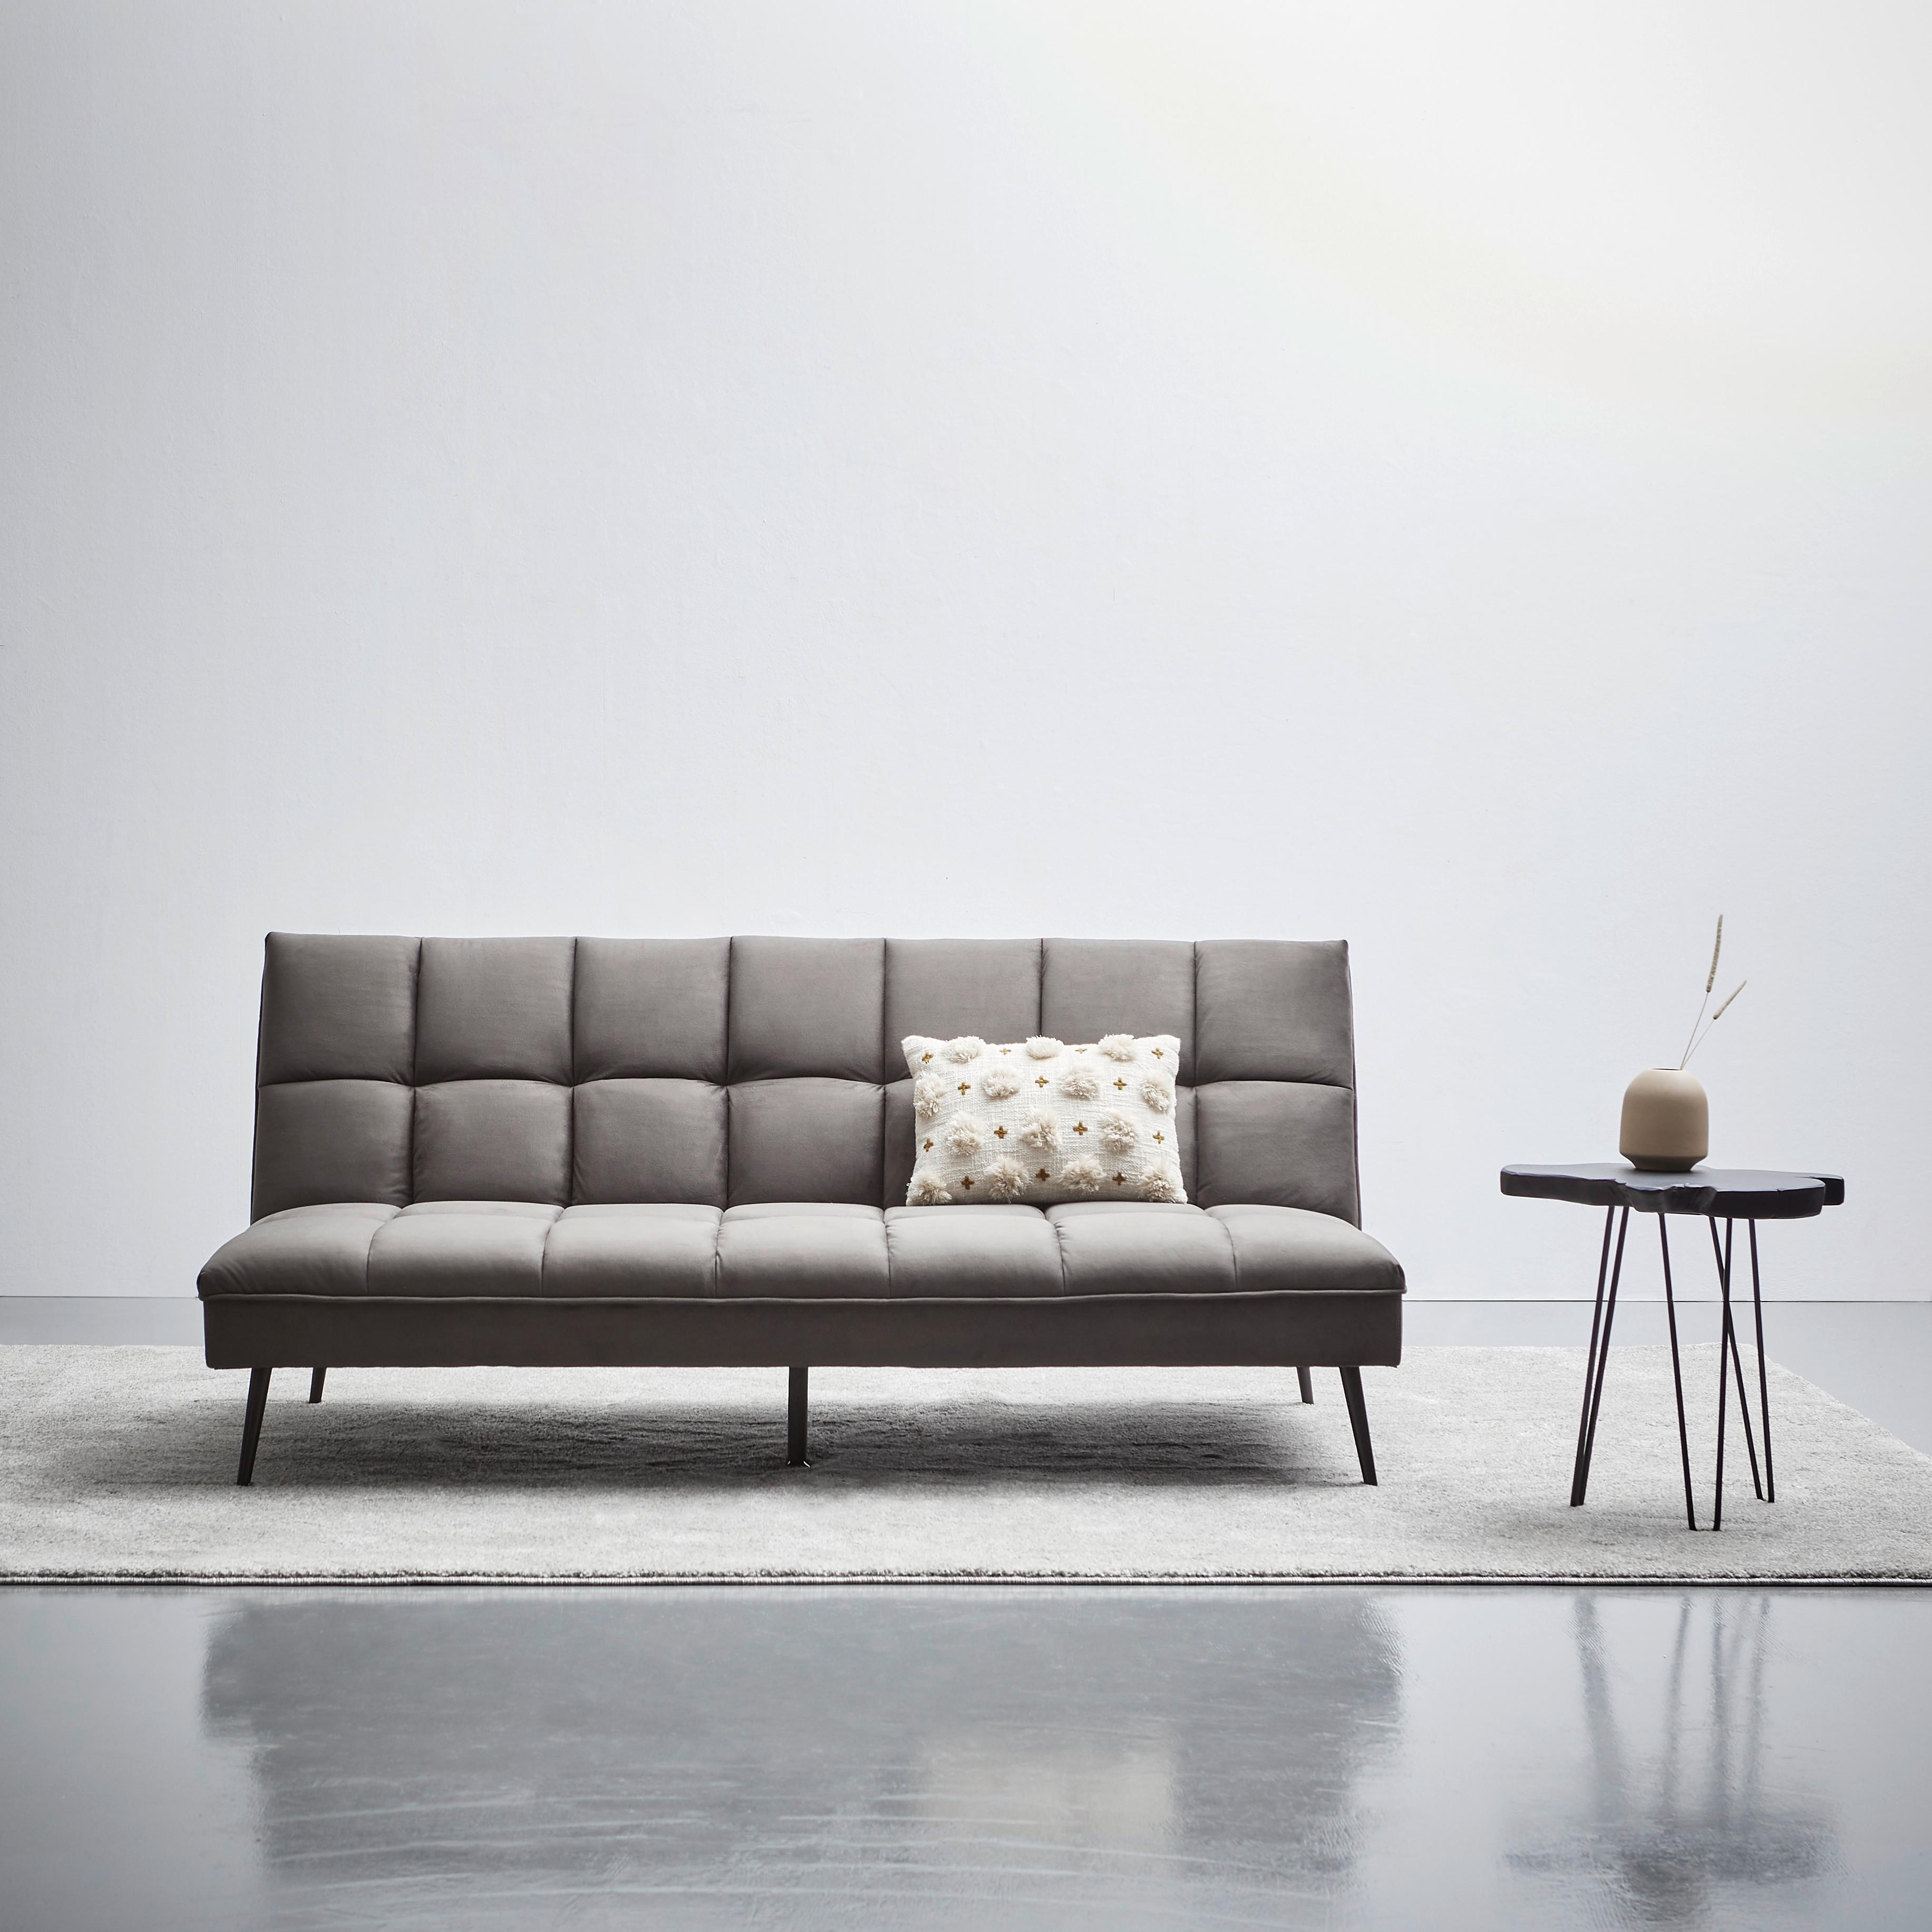 3-Sitzer-Sofa mit Schlaffunkt. Pur Grau Samtbezug - Schwarz/Grau, MODERN, Textil (178/84/98cm) - MID.YOU